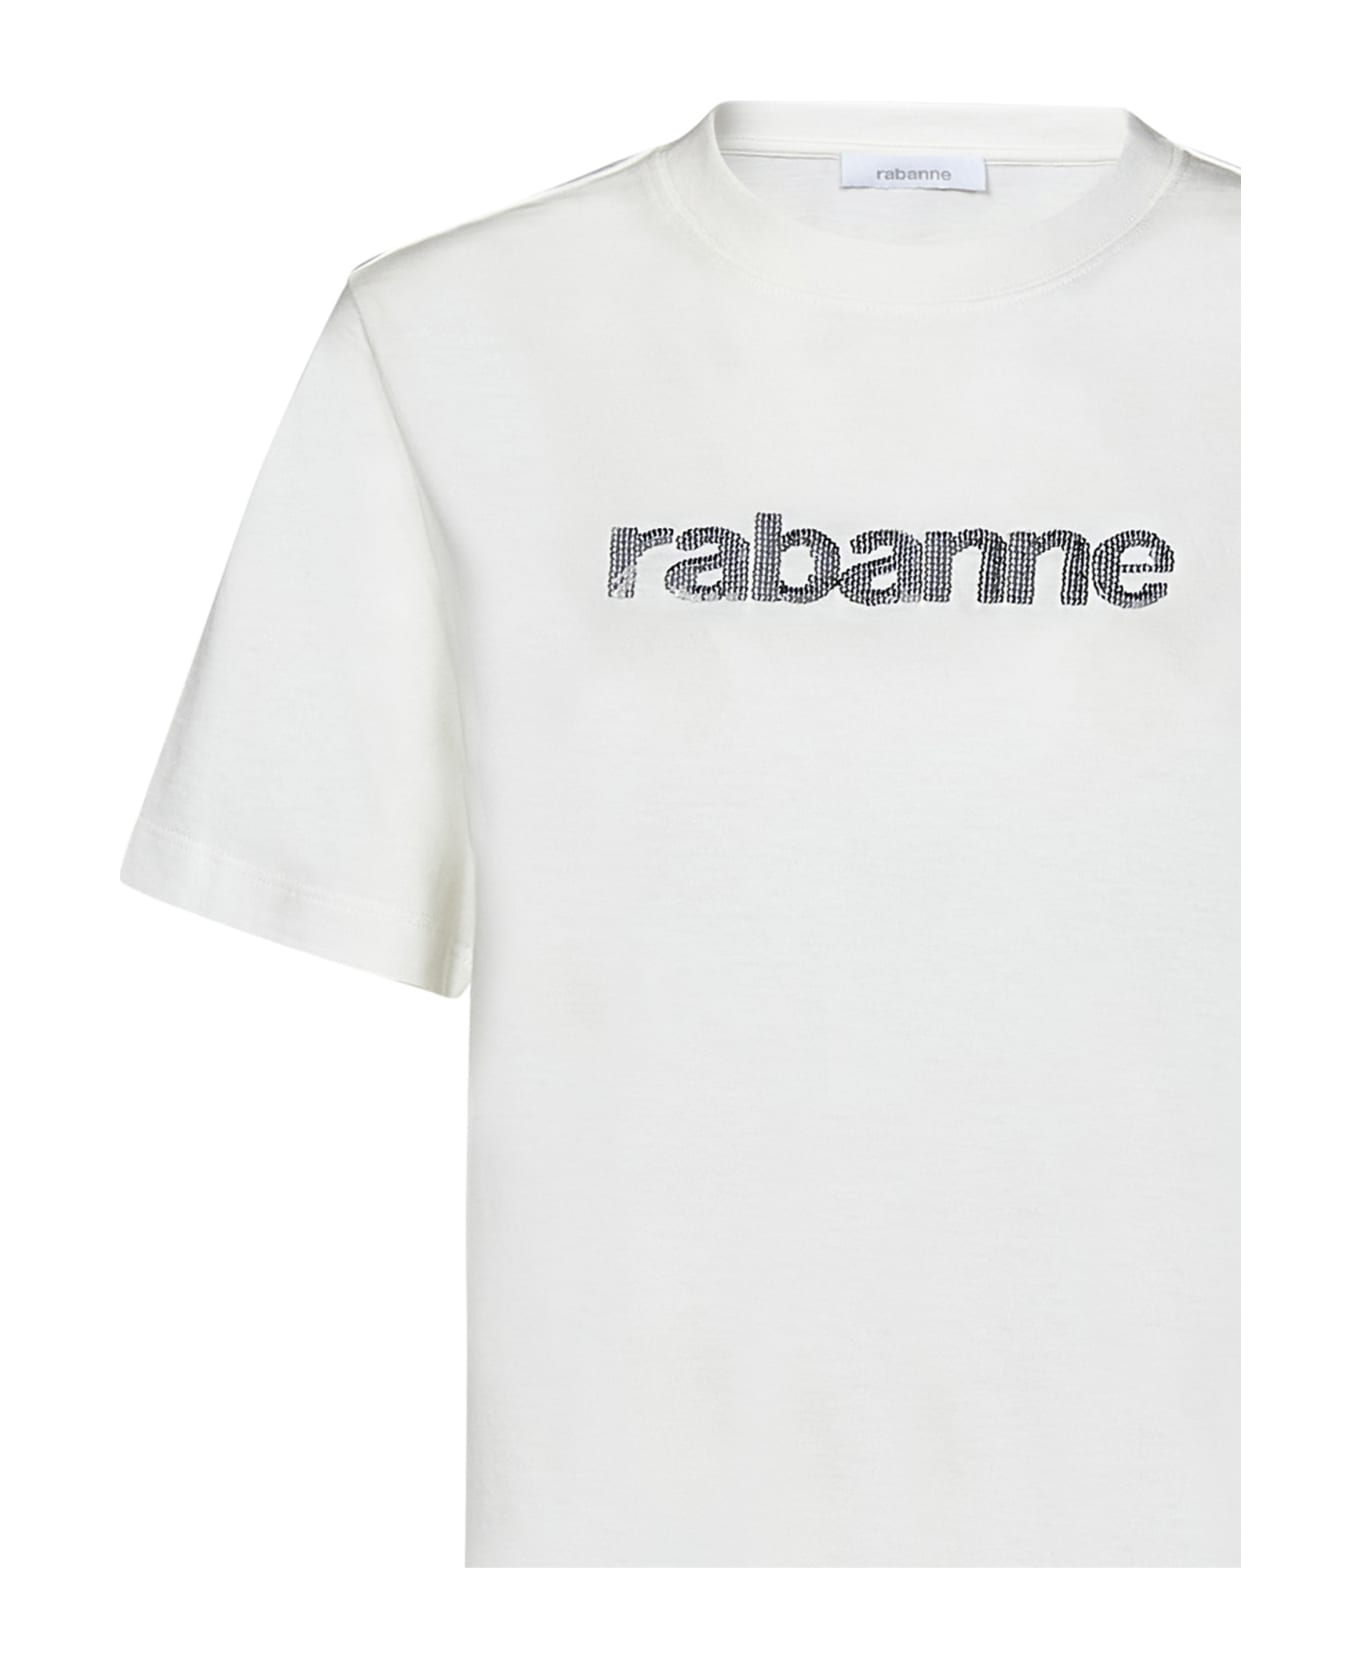 Paco Rabanne T-shirt - White